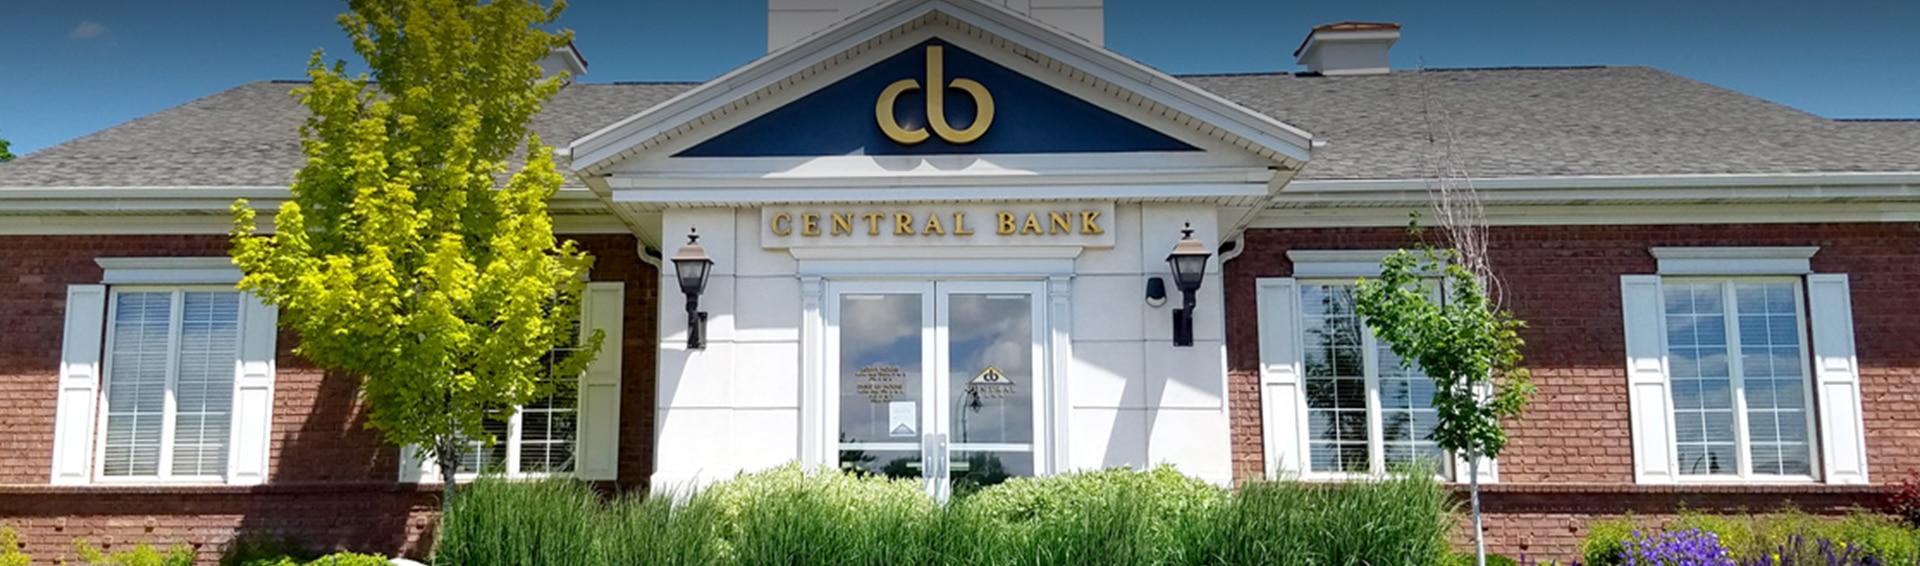 Bank of American Fork Logo - Central Bank Utah - Bank in American Fork, Utah - Come Bank With Us!